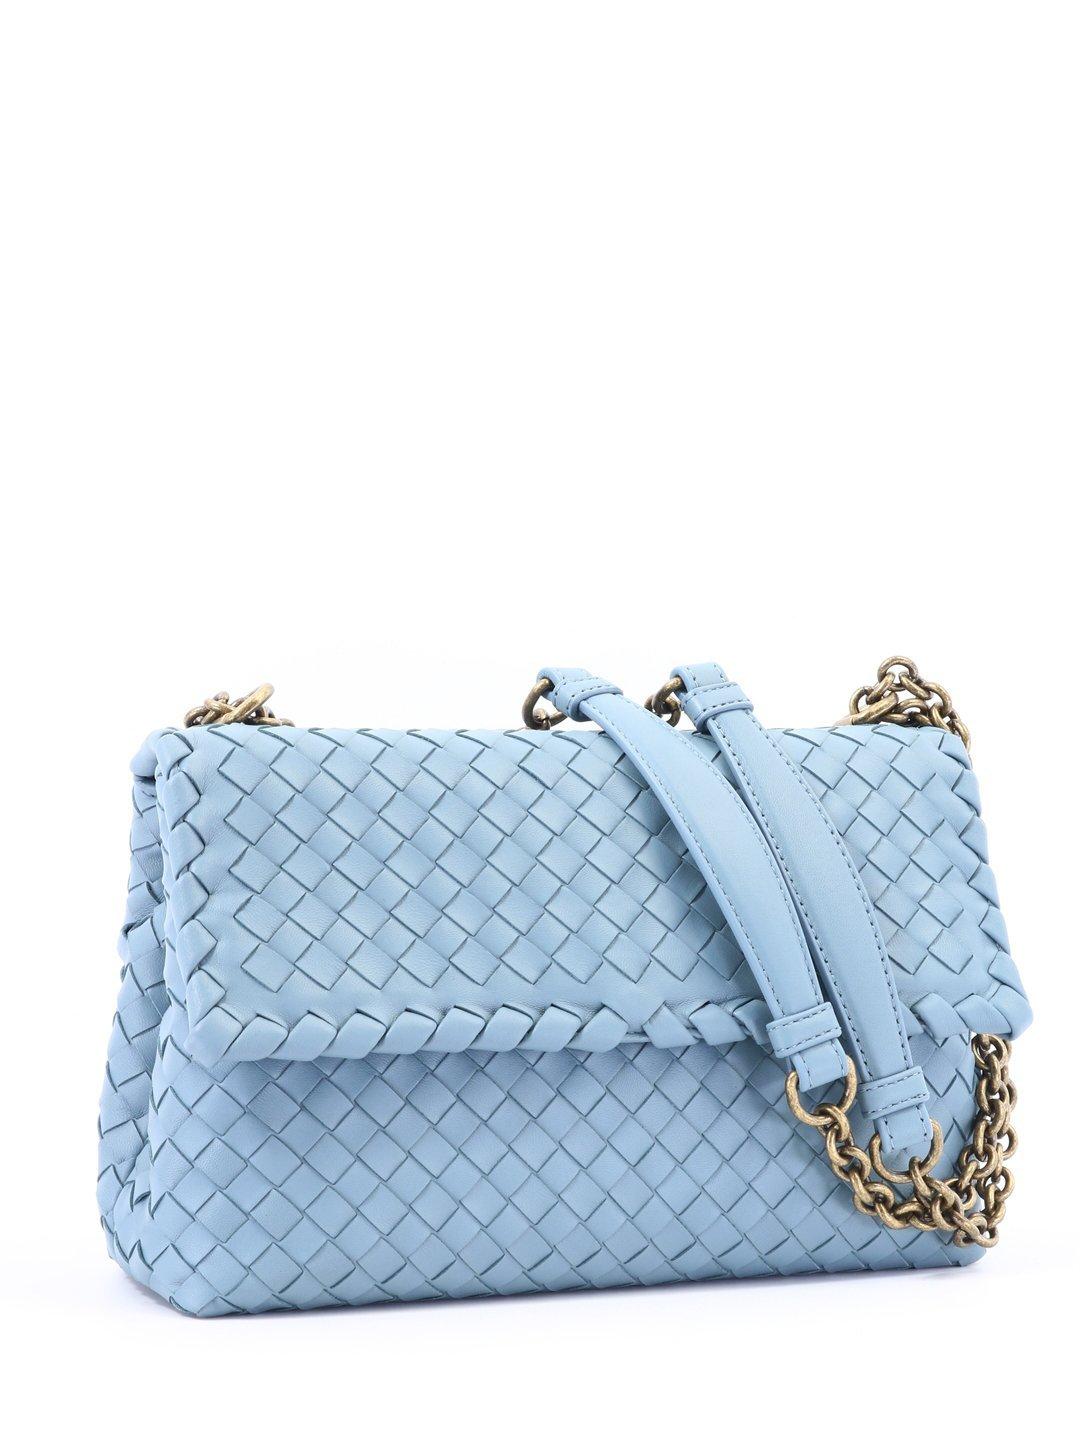 Bottega Veneta Leather Olympia Shoulder Bag in Blue - Lyst